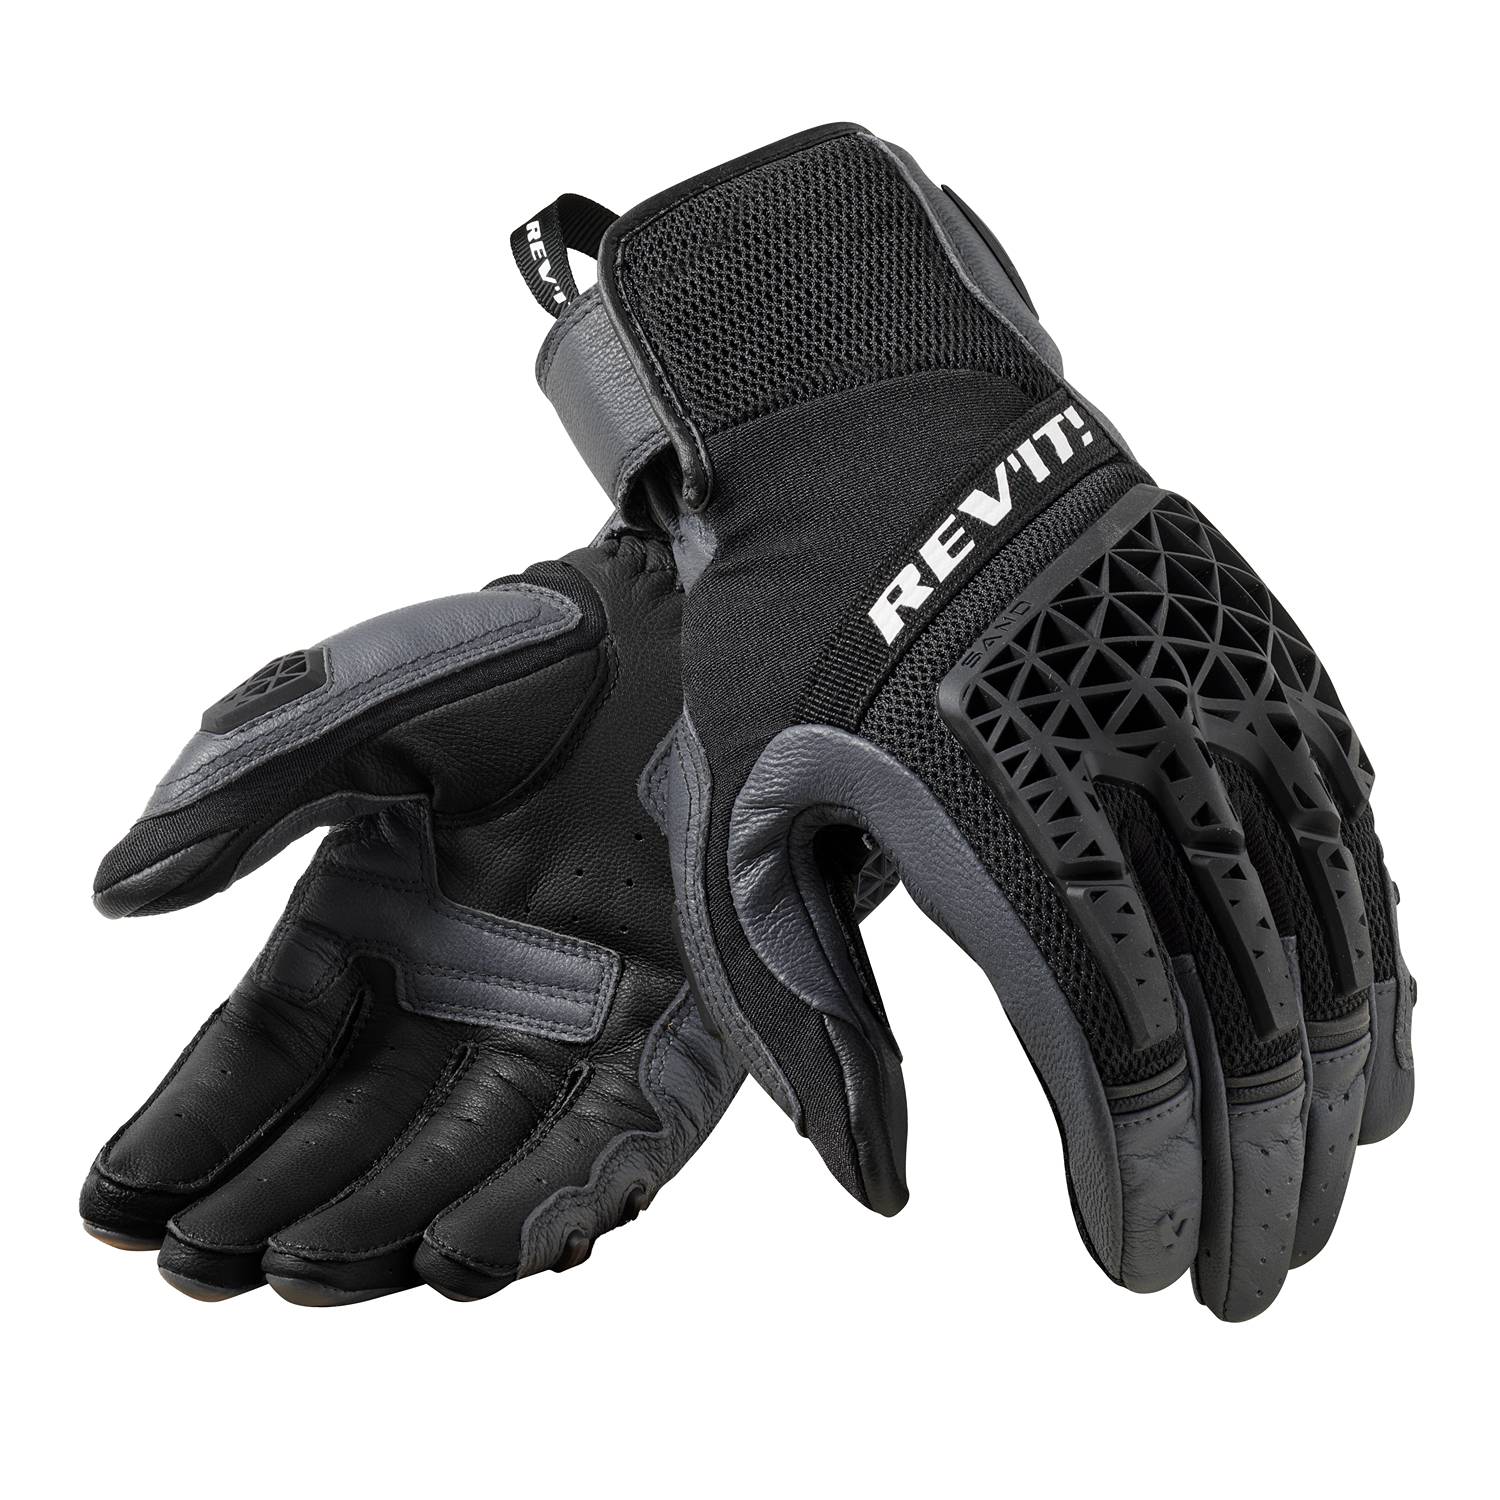 Image of REV'IT! Sand 4 Gloves Gray Black Size M EN